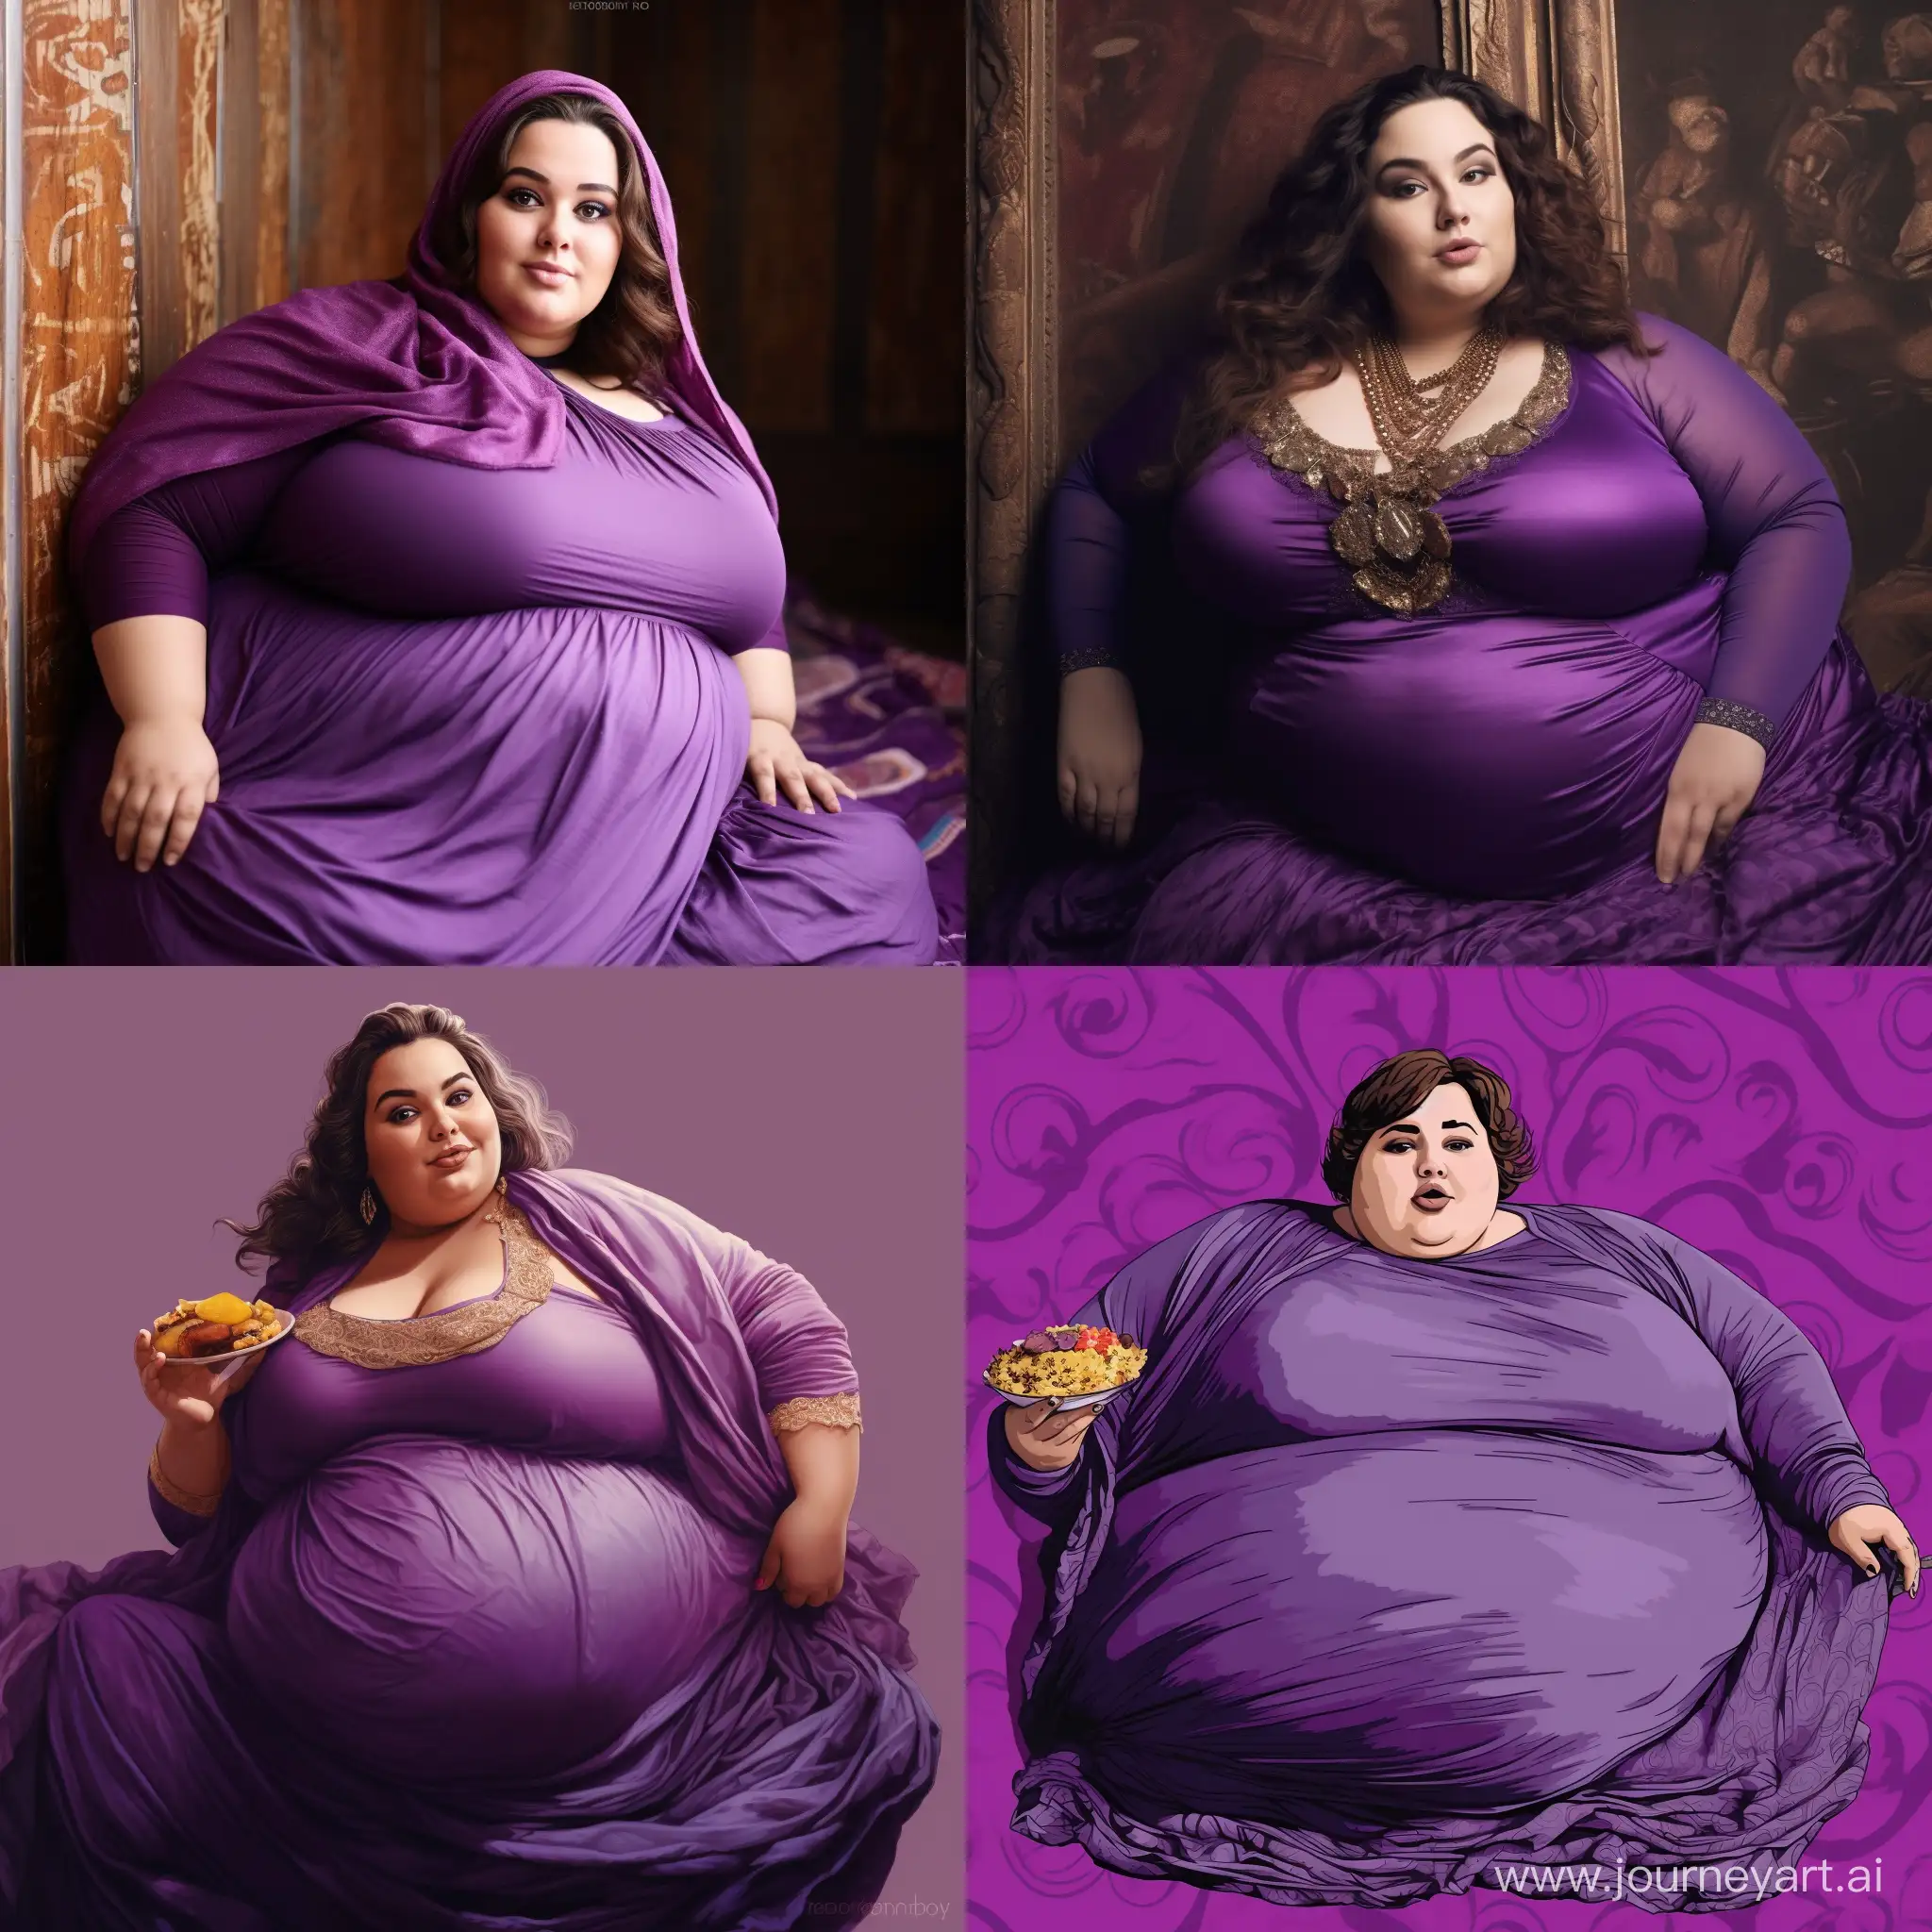 A fat iraqi woman with a big belly wearing a purple dishdasha